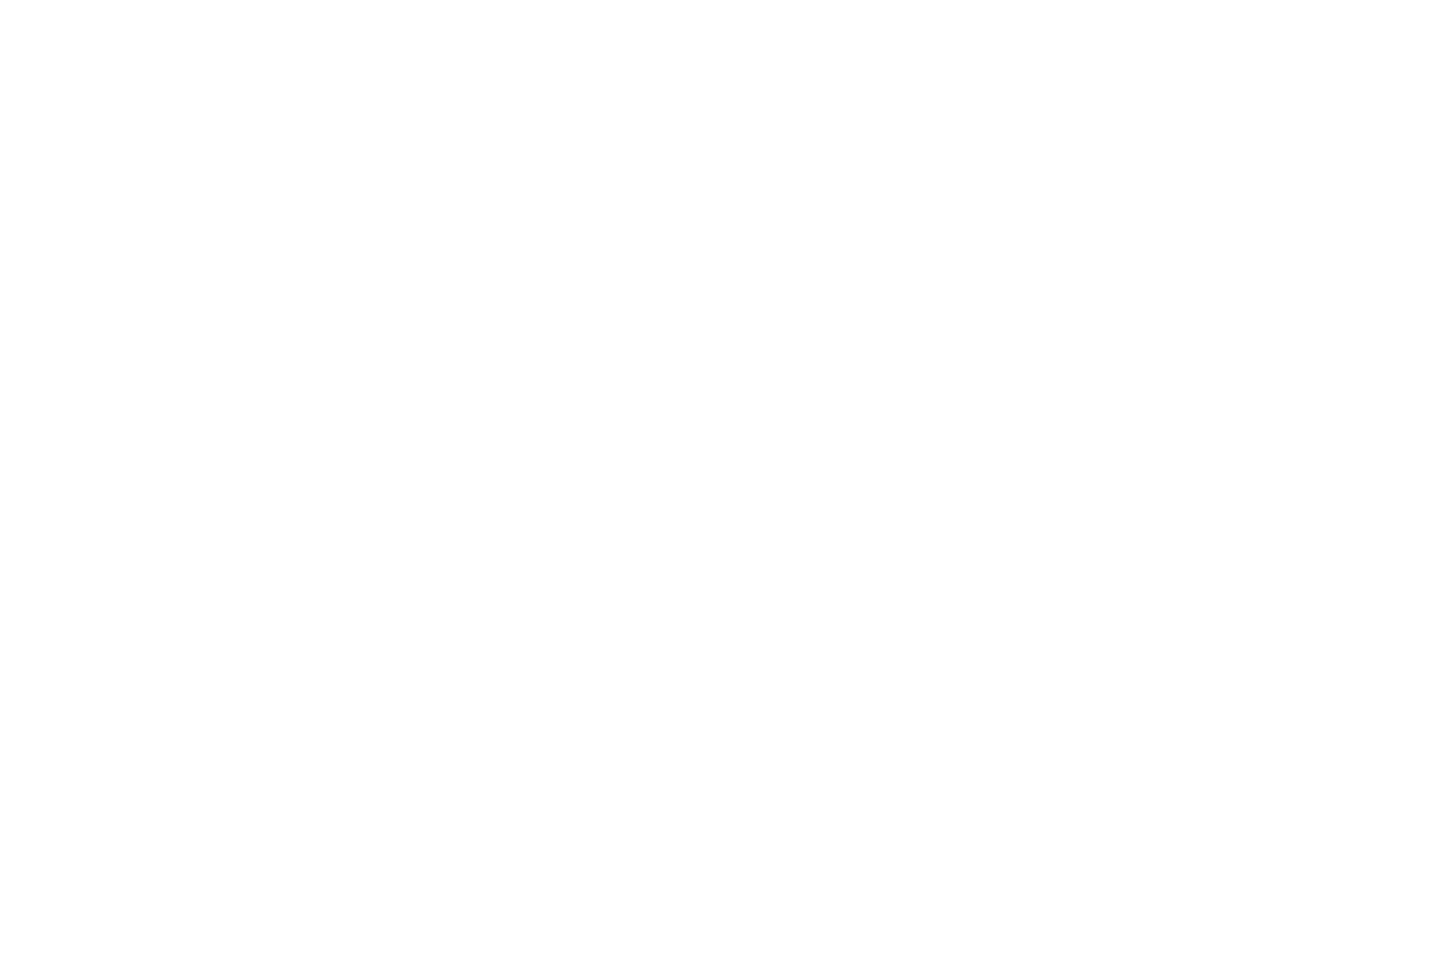 San Sebastian Film Festival 2021 a entrega e Donostia Award di su edicion number 69 na Johnny Depp  E actor a recoge    